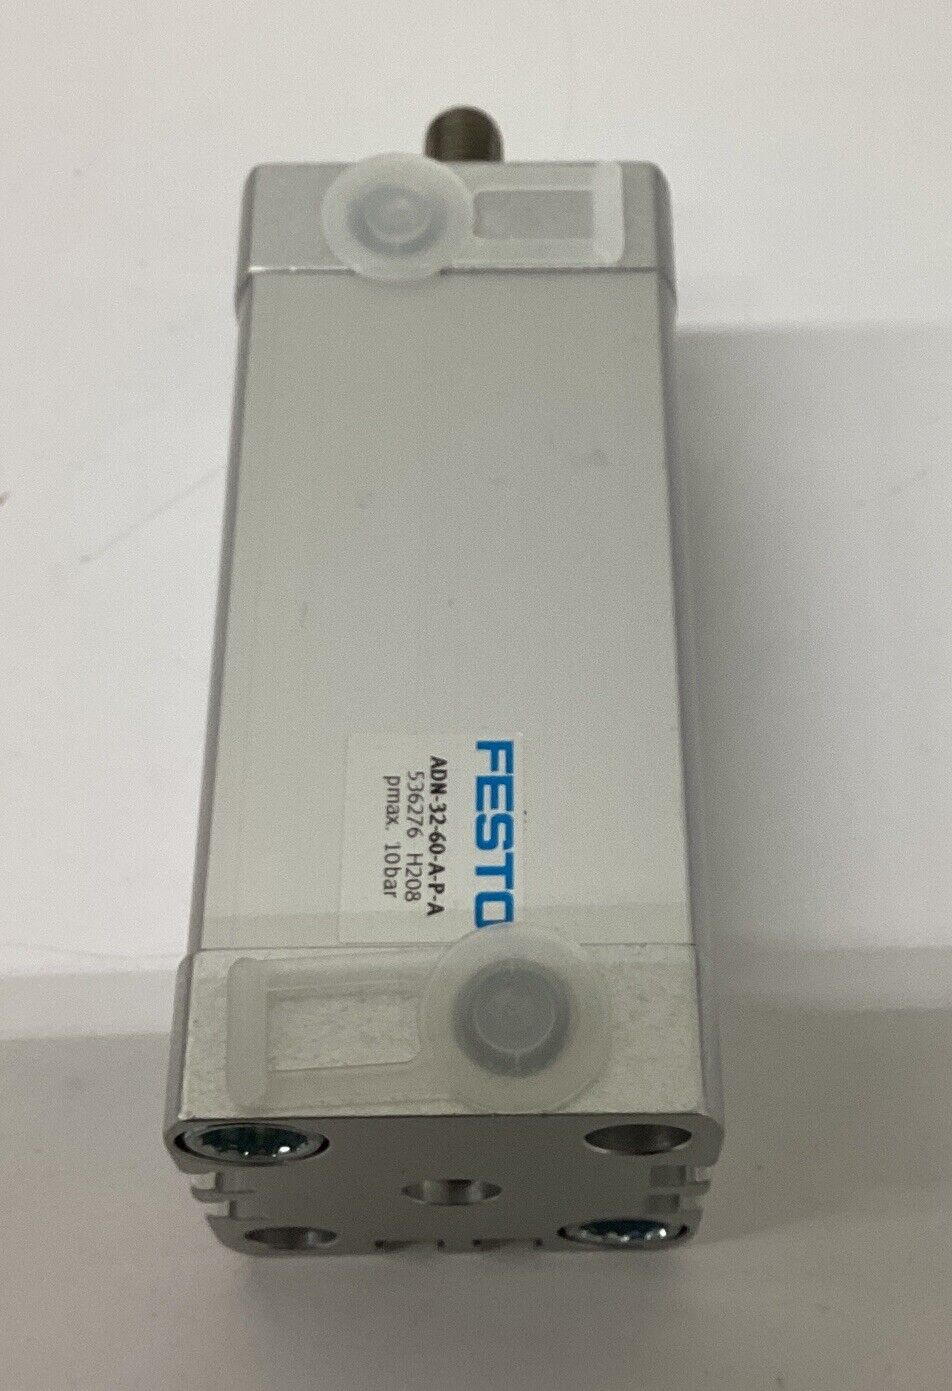 Festo ADN-32-60-A-P-A / 536276 Compact Cylinder 32mm Piston x 60mm Stroke BL291